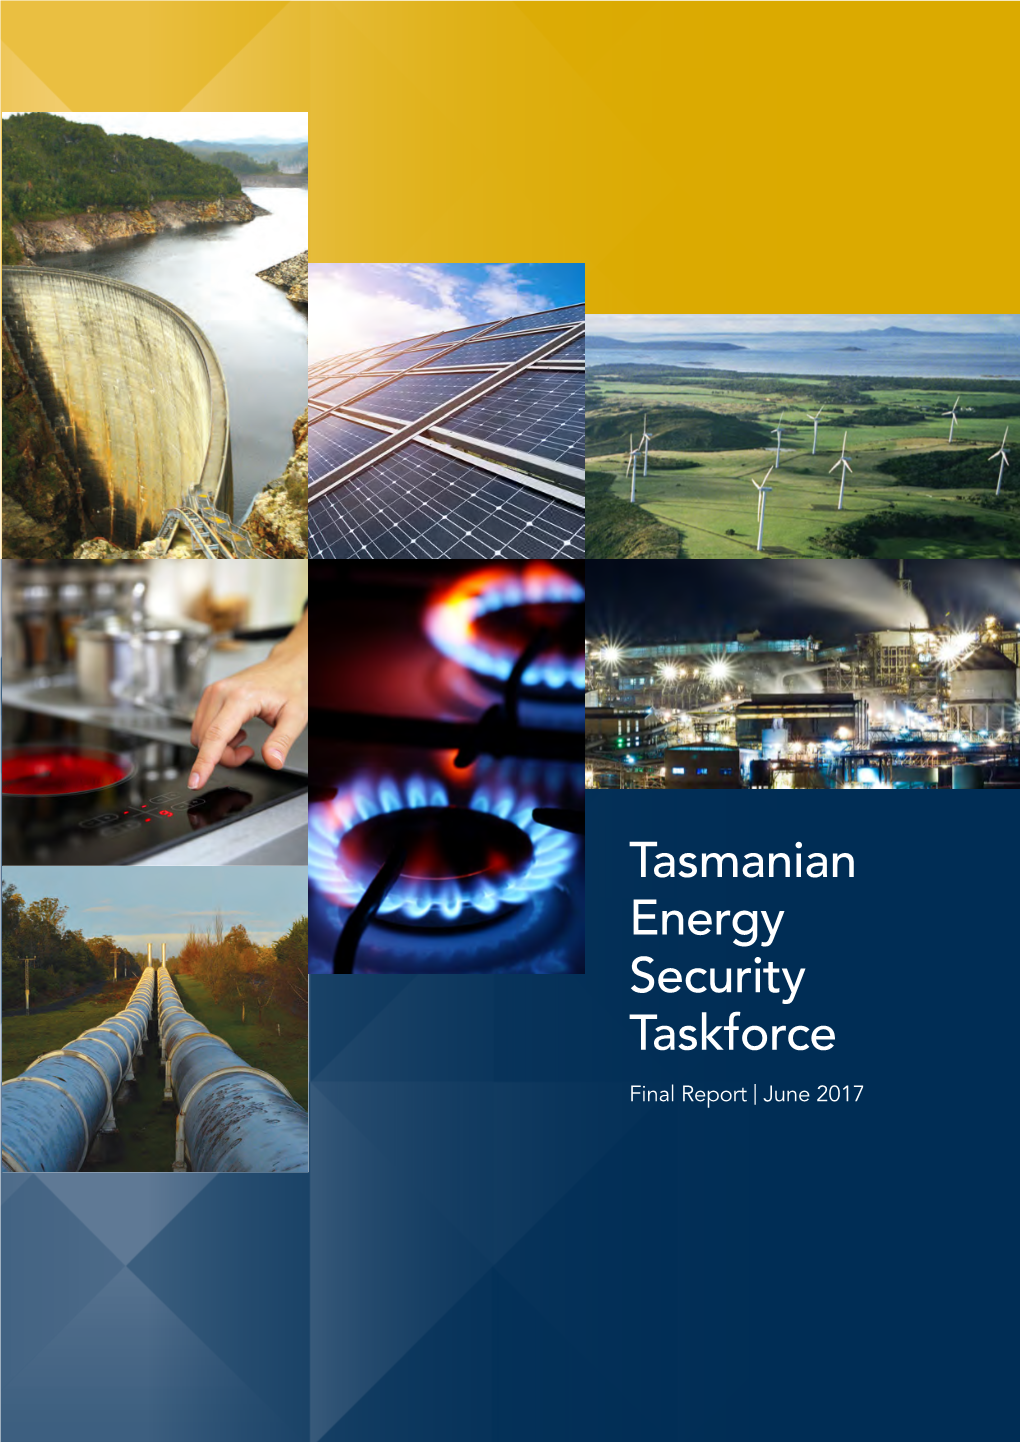 Tasmanian Energy Security Taskforce Final Report